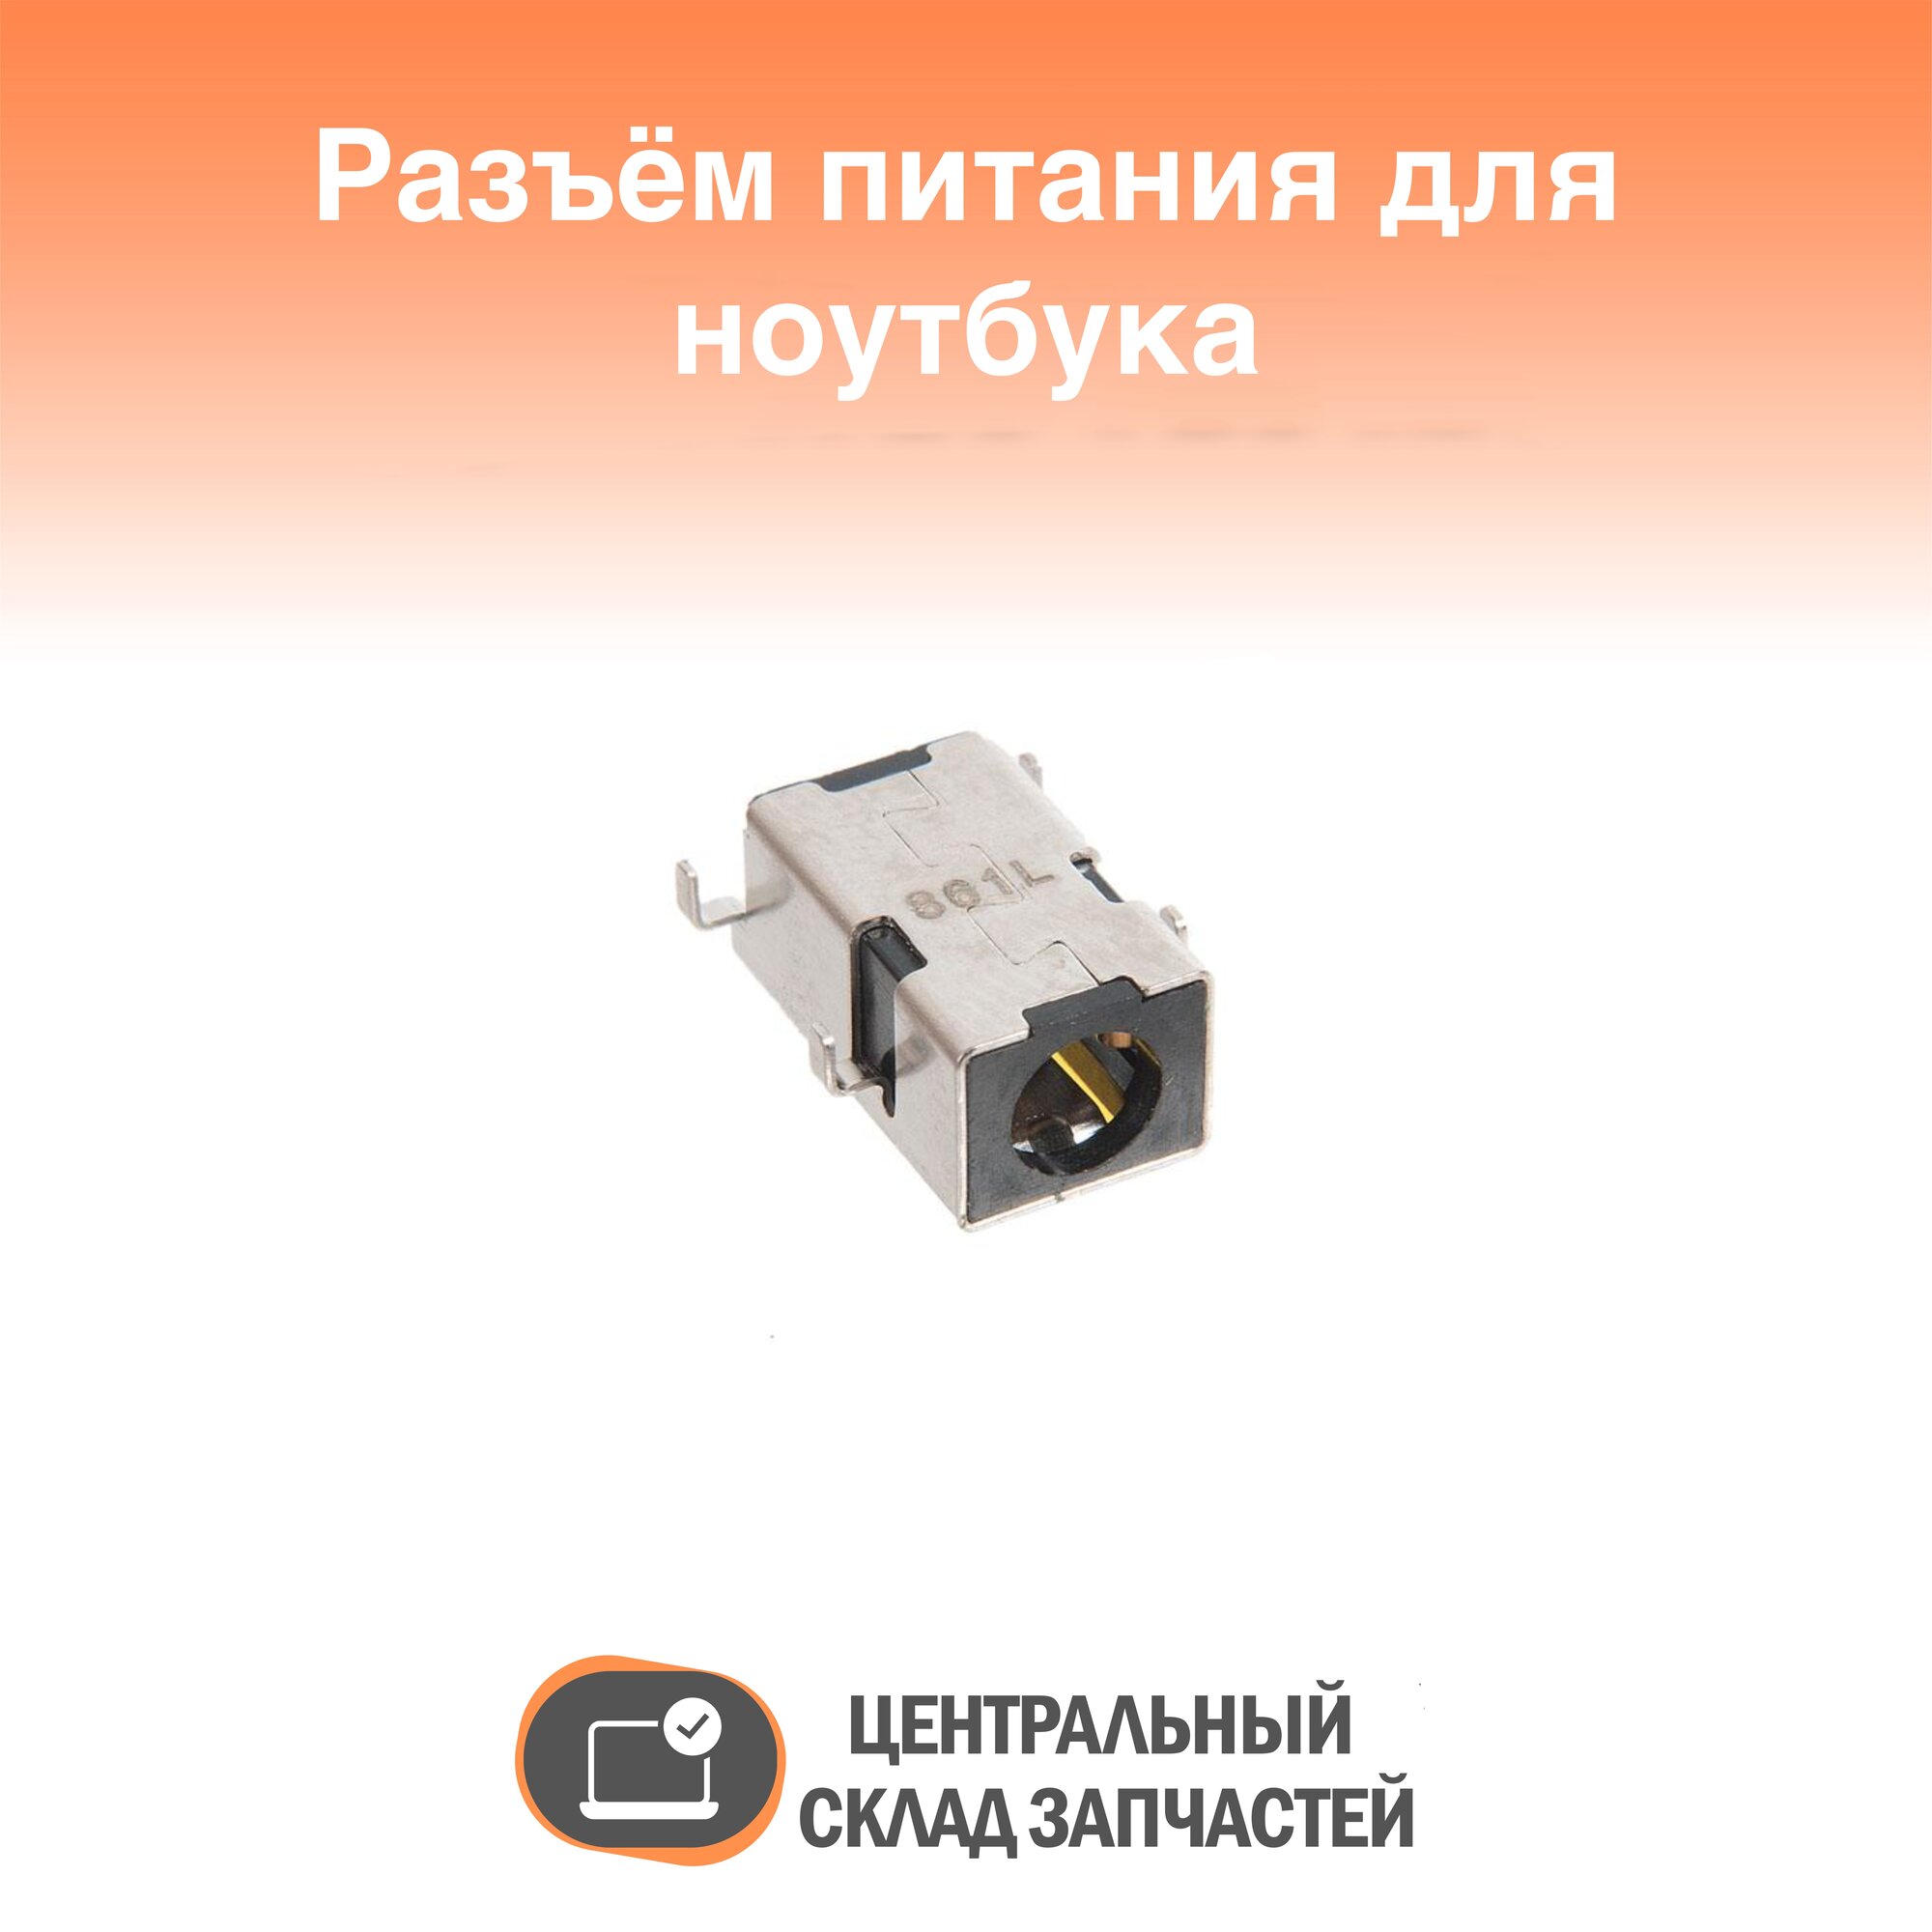 Power connector / Разъем питания для ноутбука Lenovo 110-17Acl, 100-14Ibd, 100-15Ibd